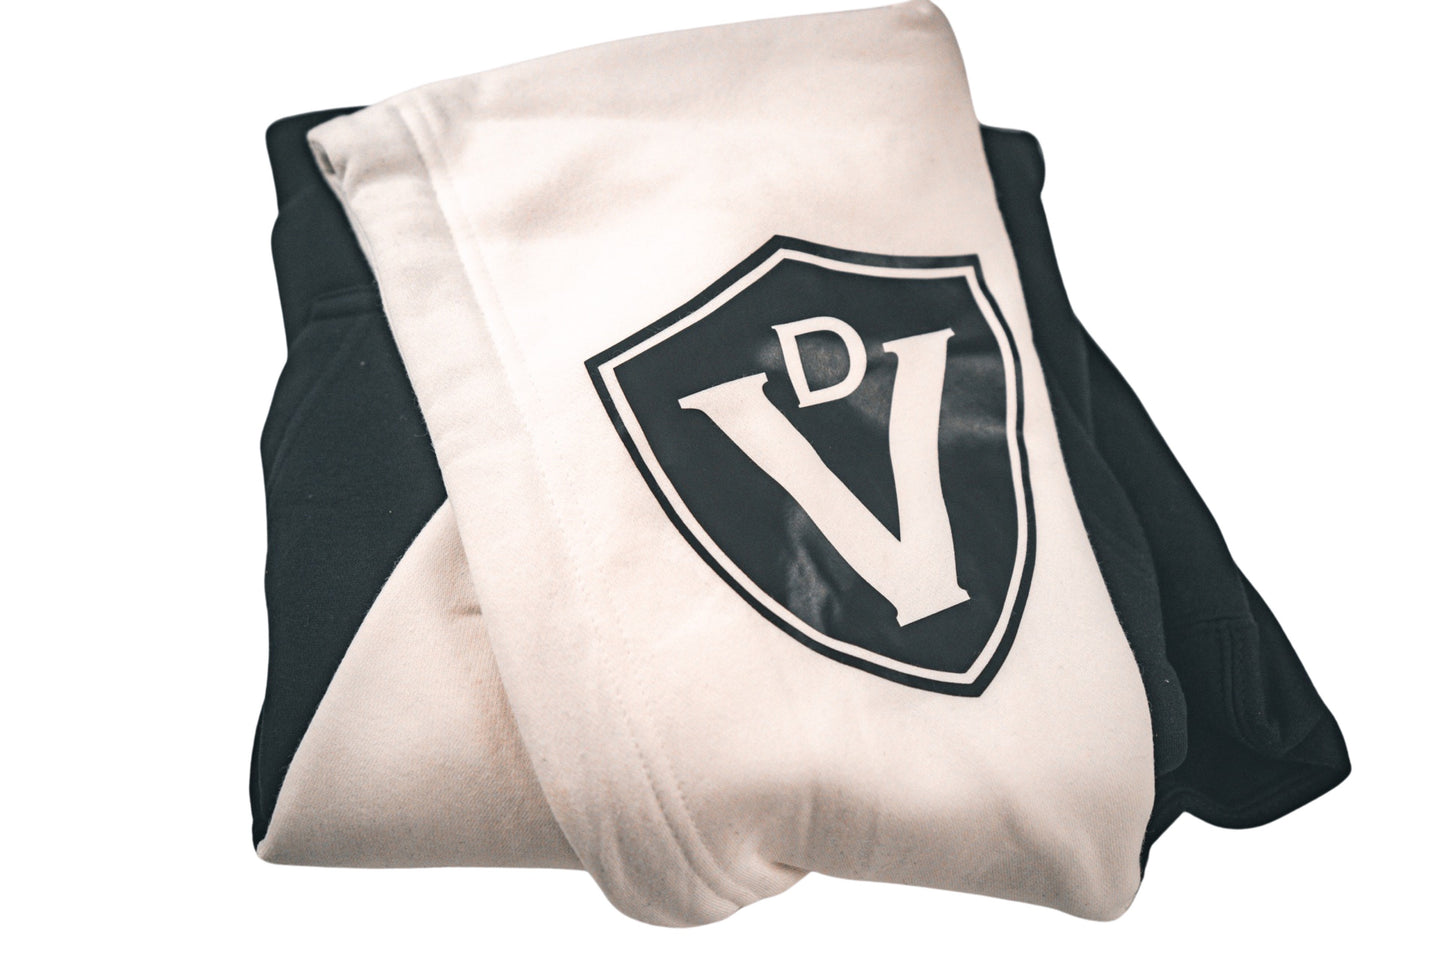 Valvetronic Designs Black & White Hoodie